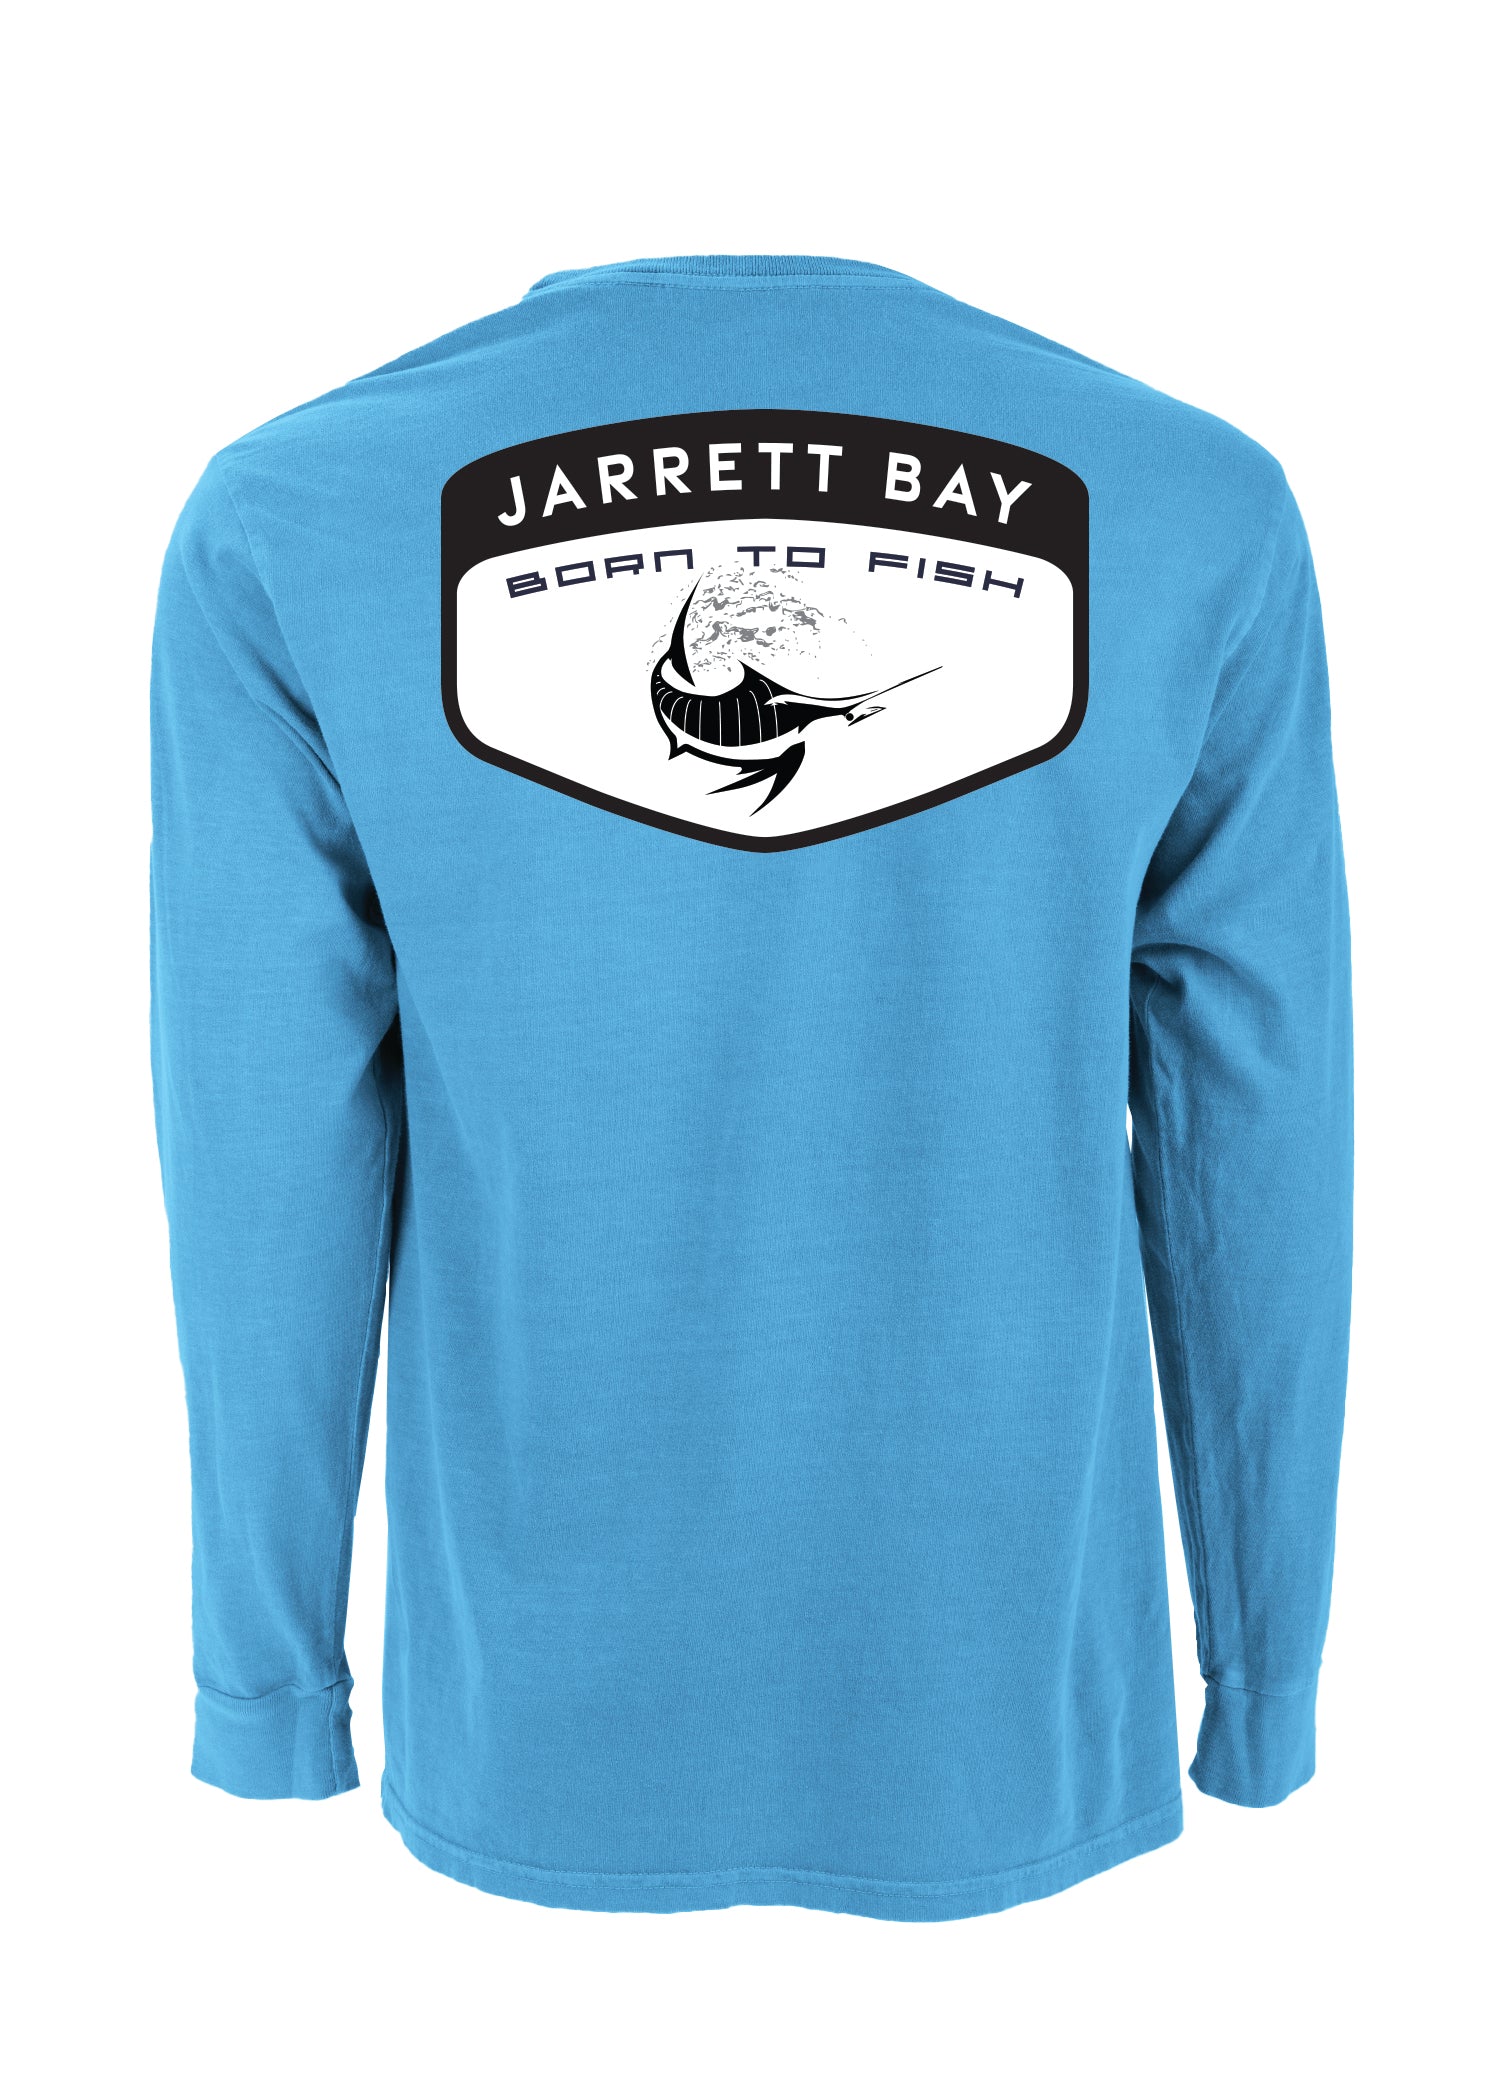 Born To Fish Long Sleeve Shirt - Jarrett Bay Boathouse